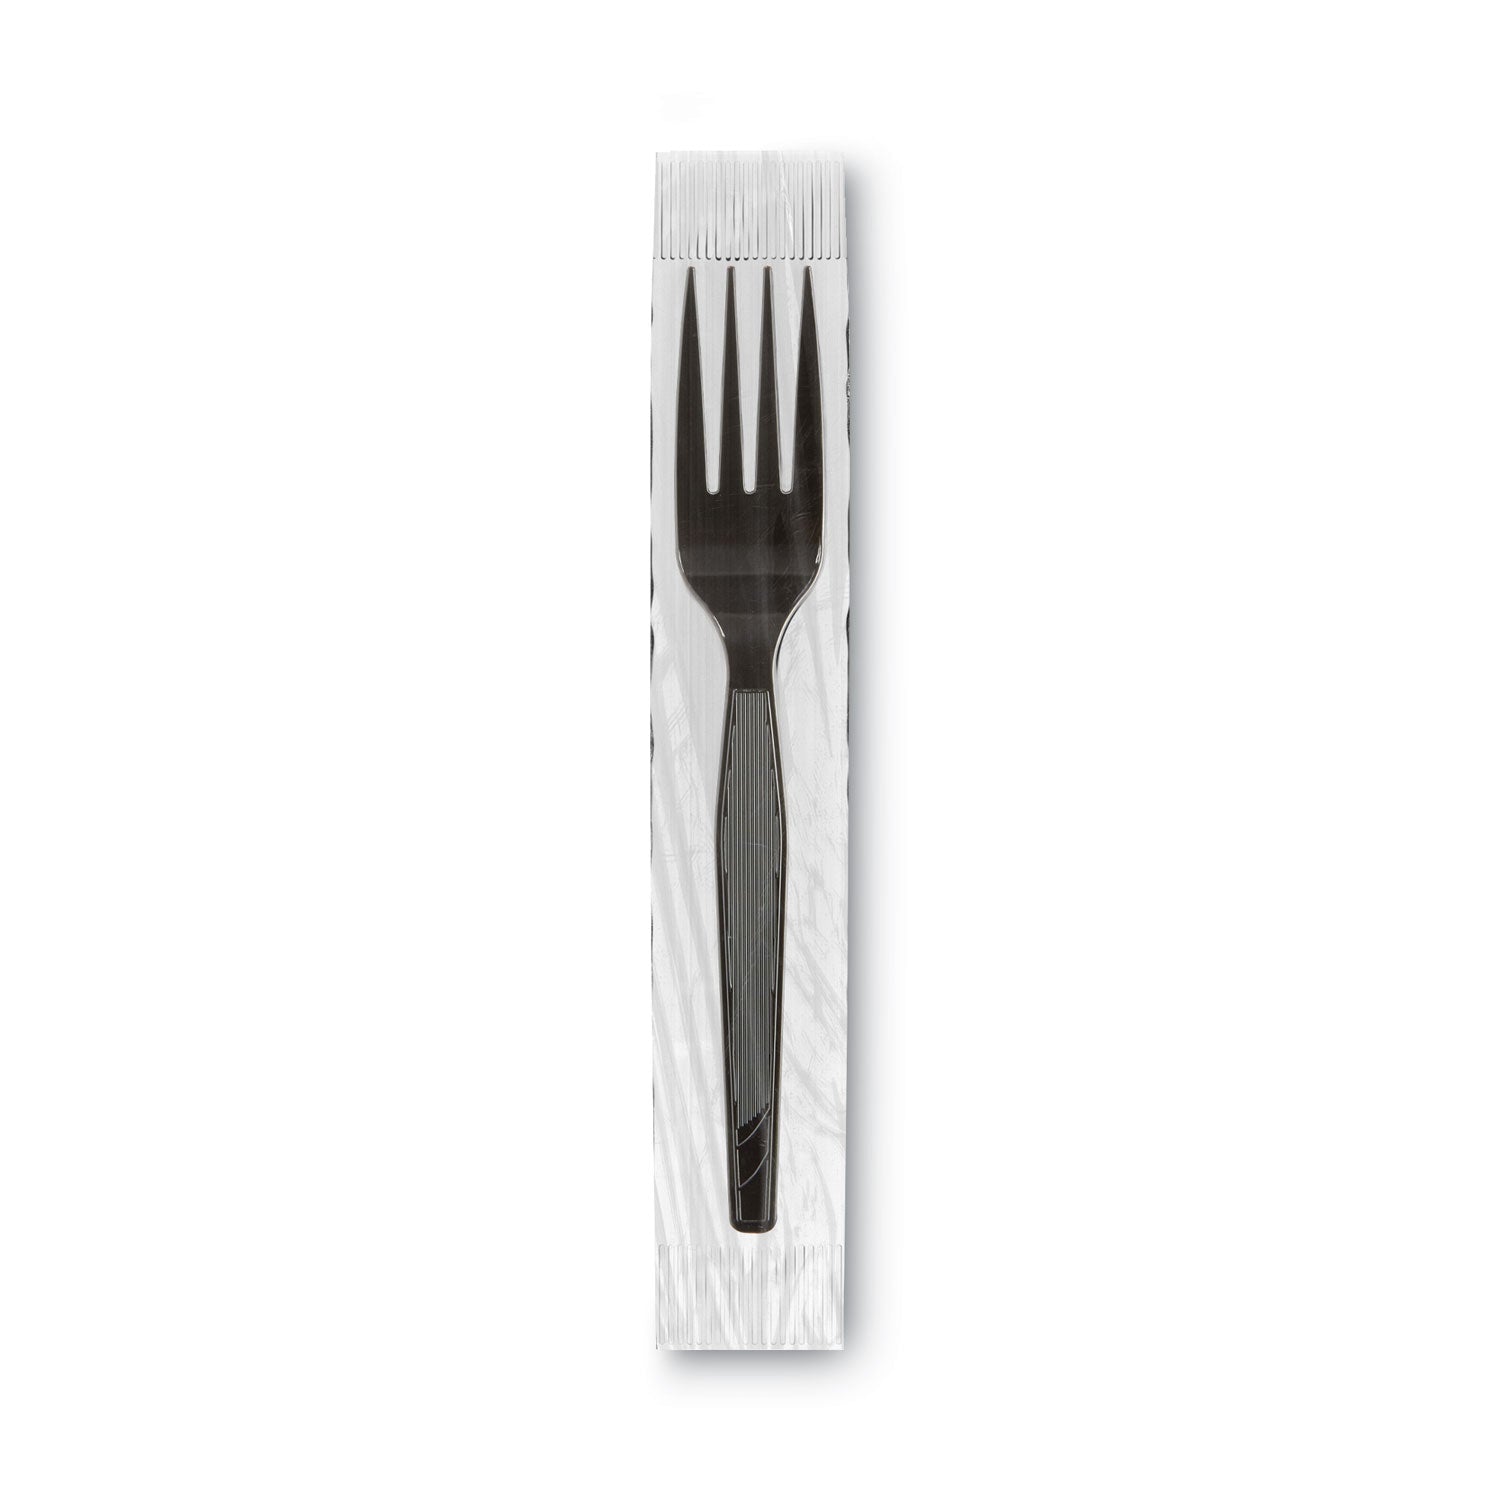 GrabN Go Wrapped Cutlery, Forks, Black, 90/Box - 